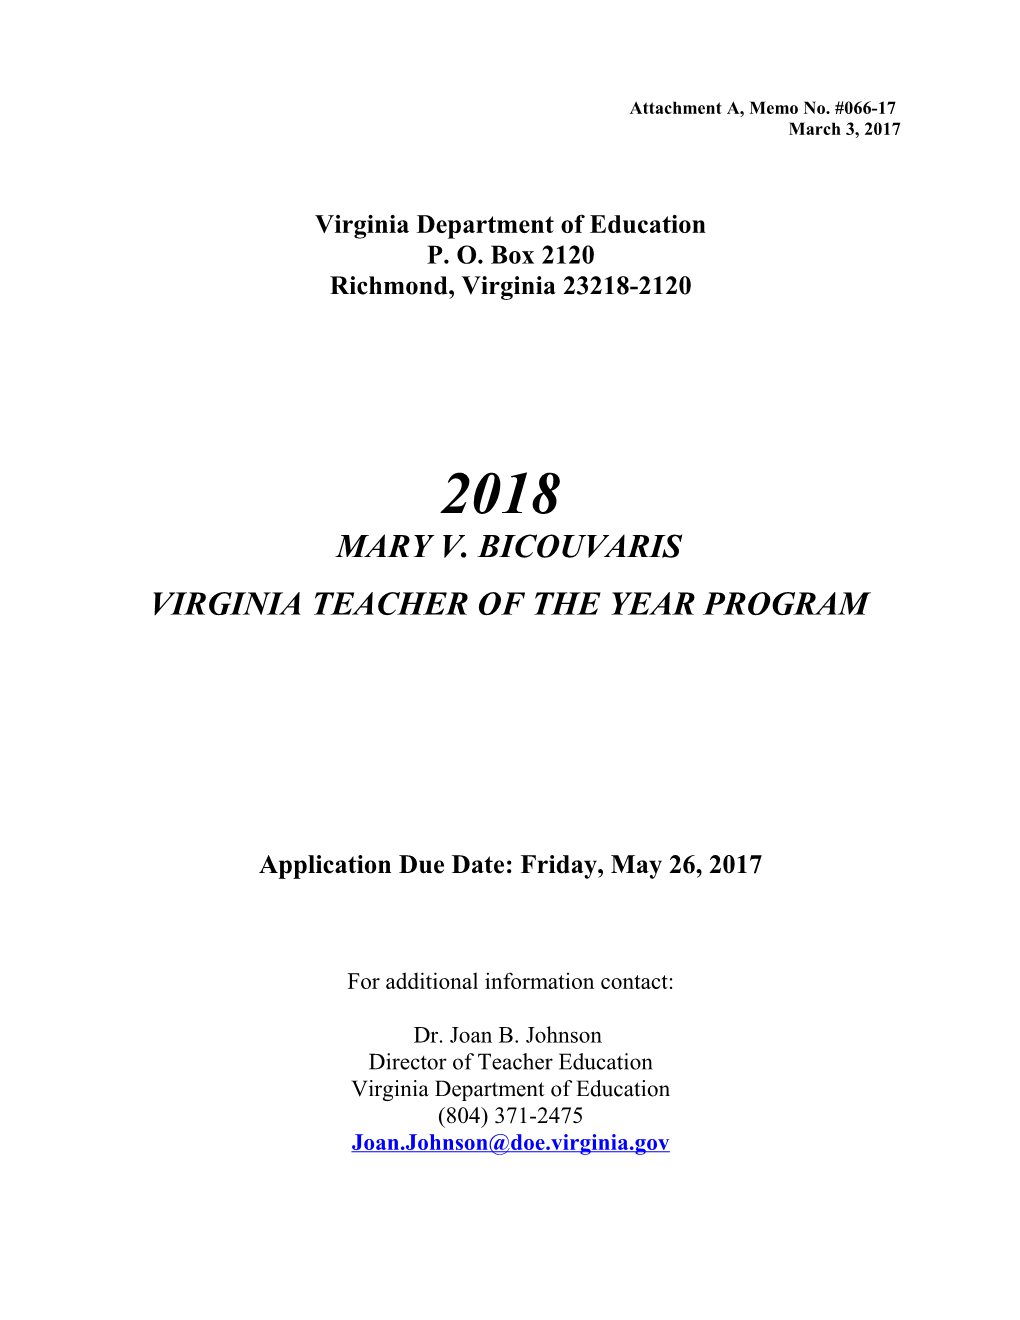 2002 Virginia of the Year Program